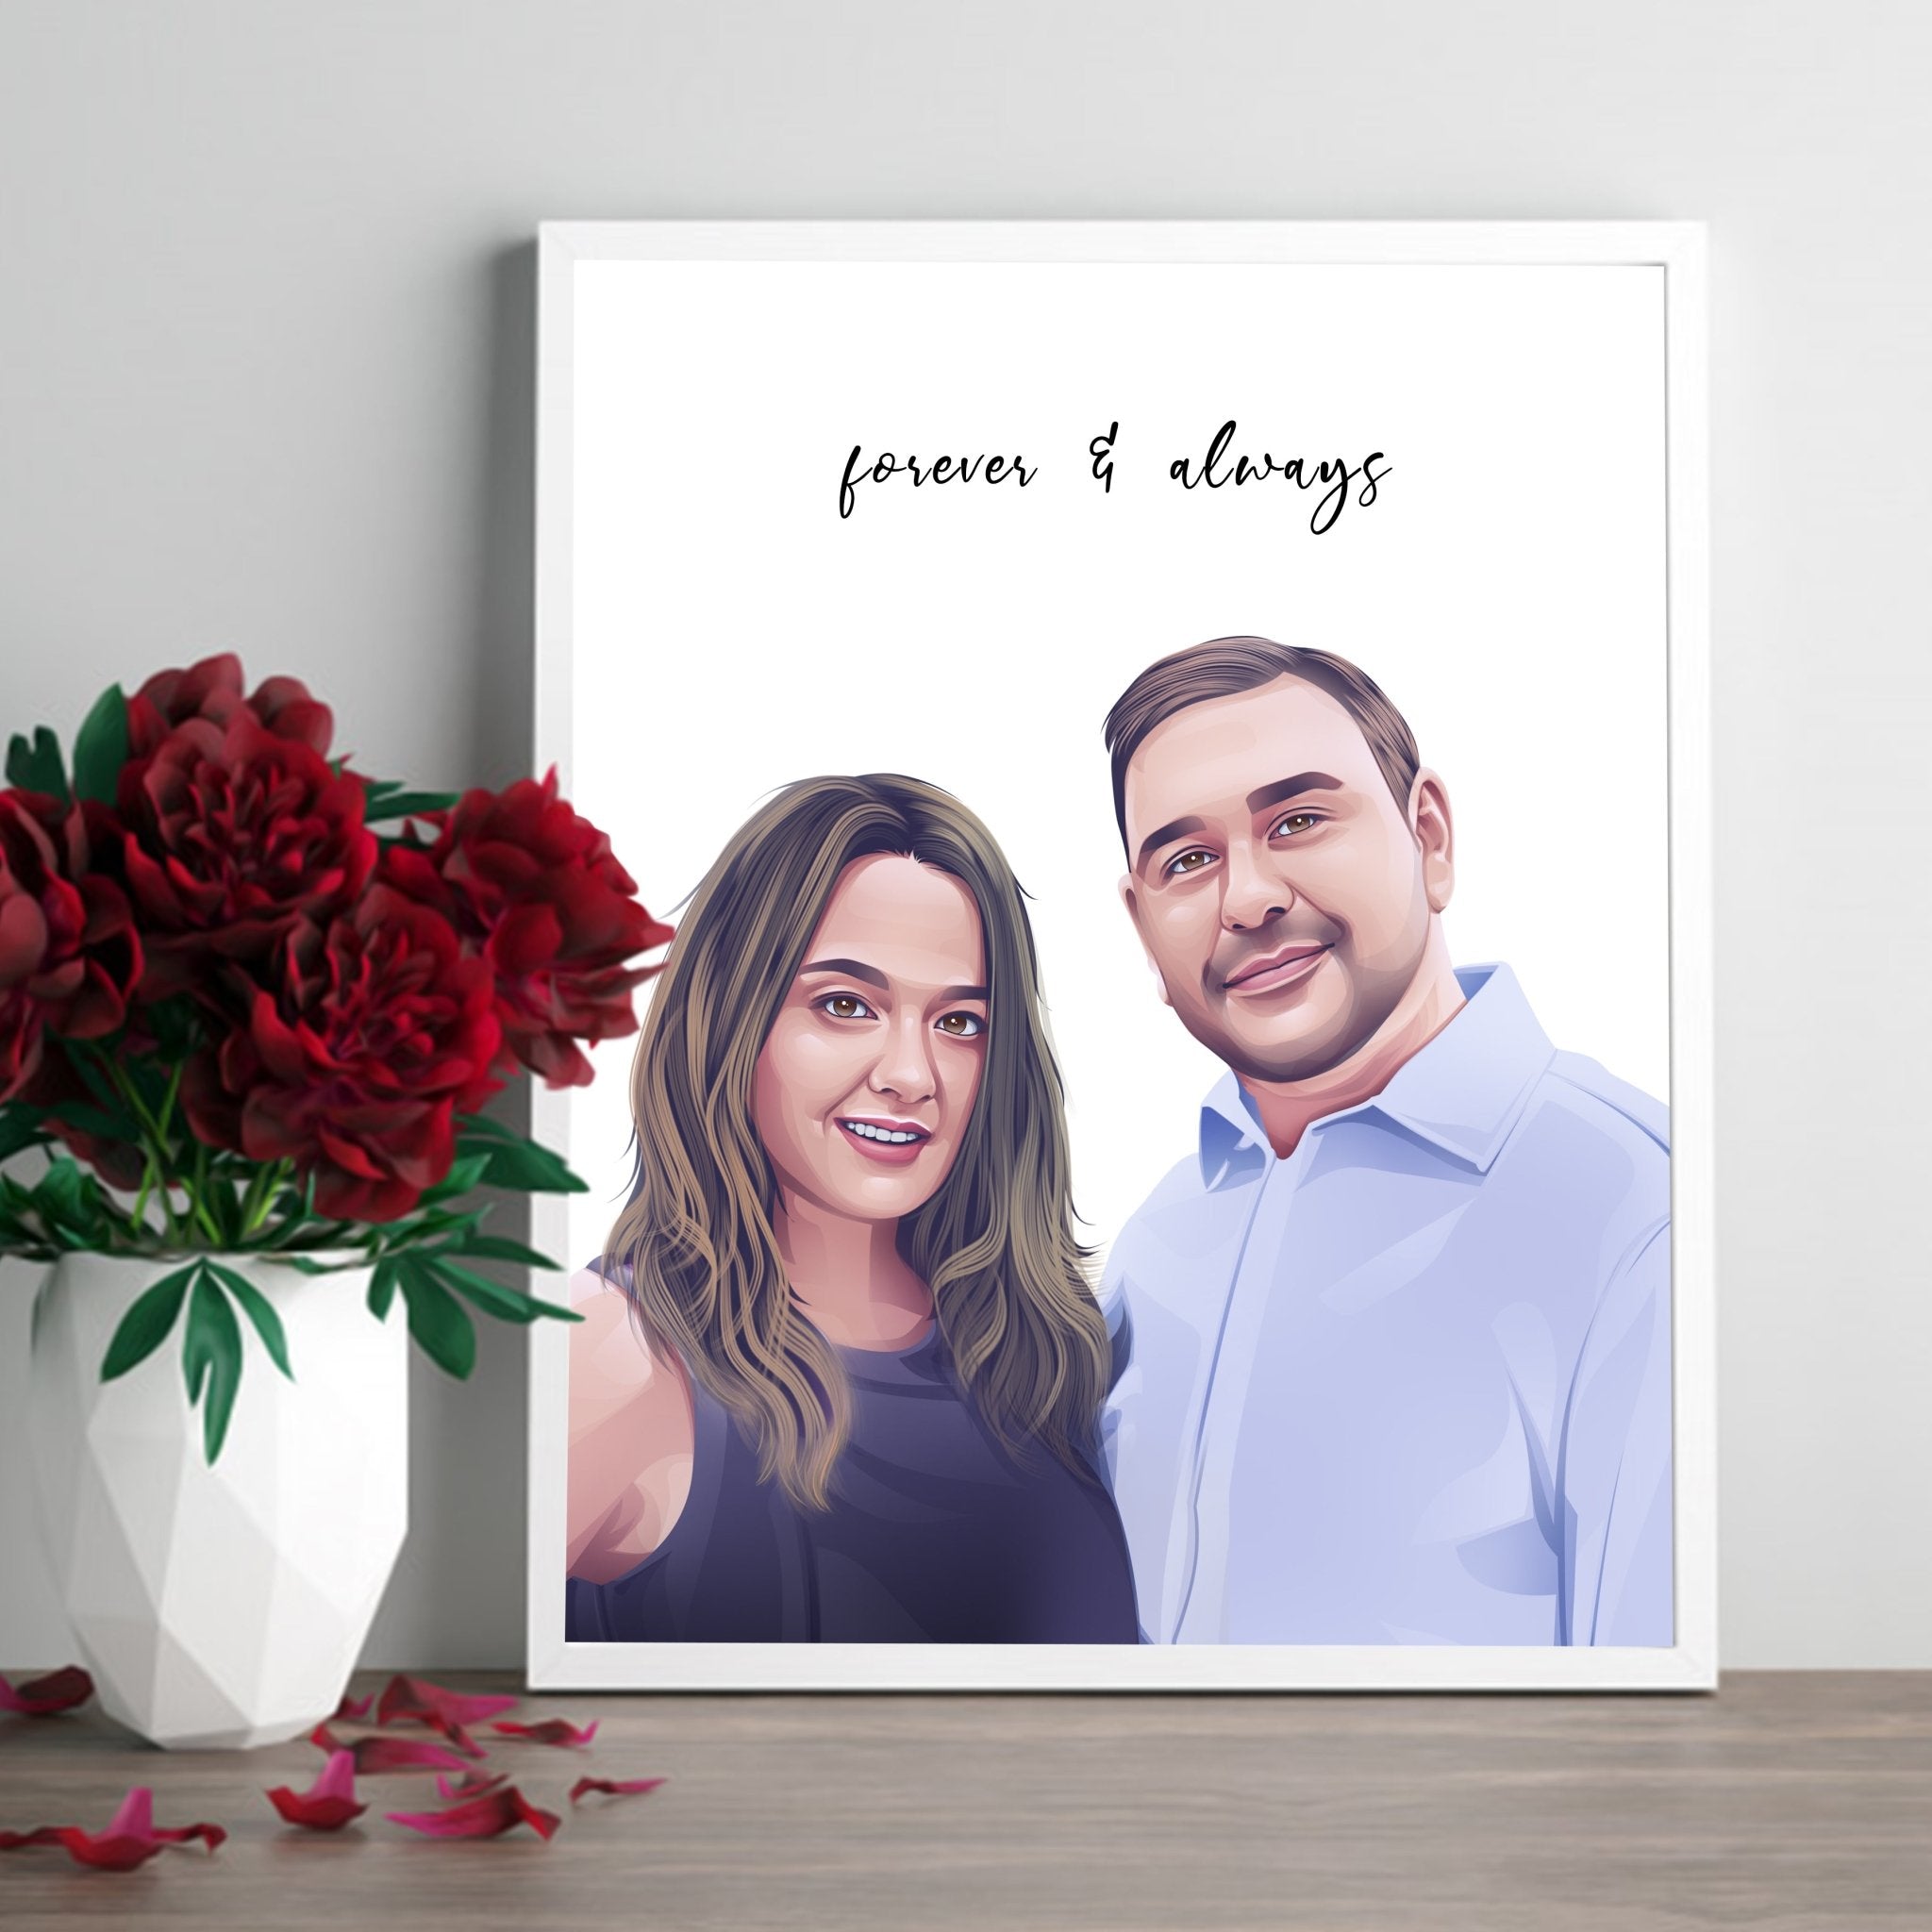 Forever Couple Gift Illustration - Couples Gift Ideas